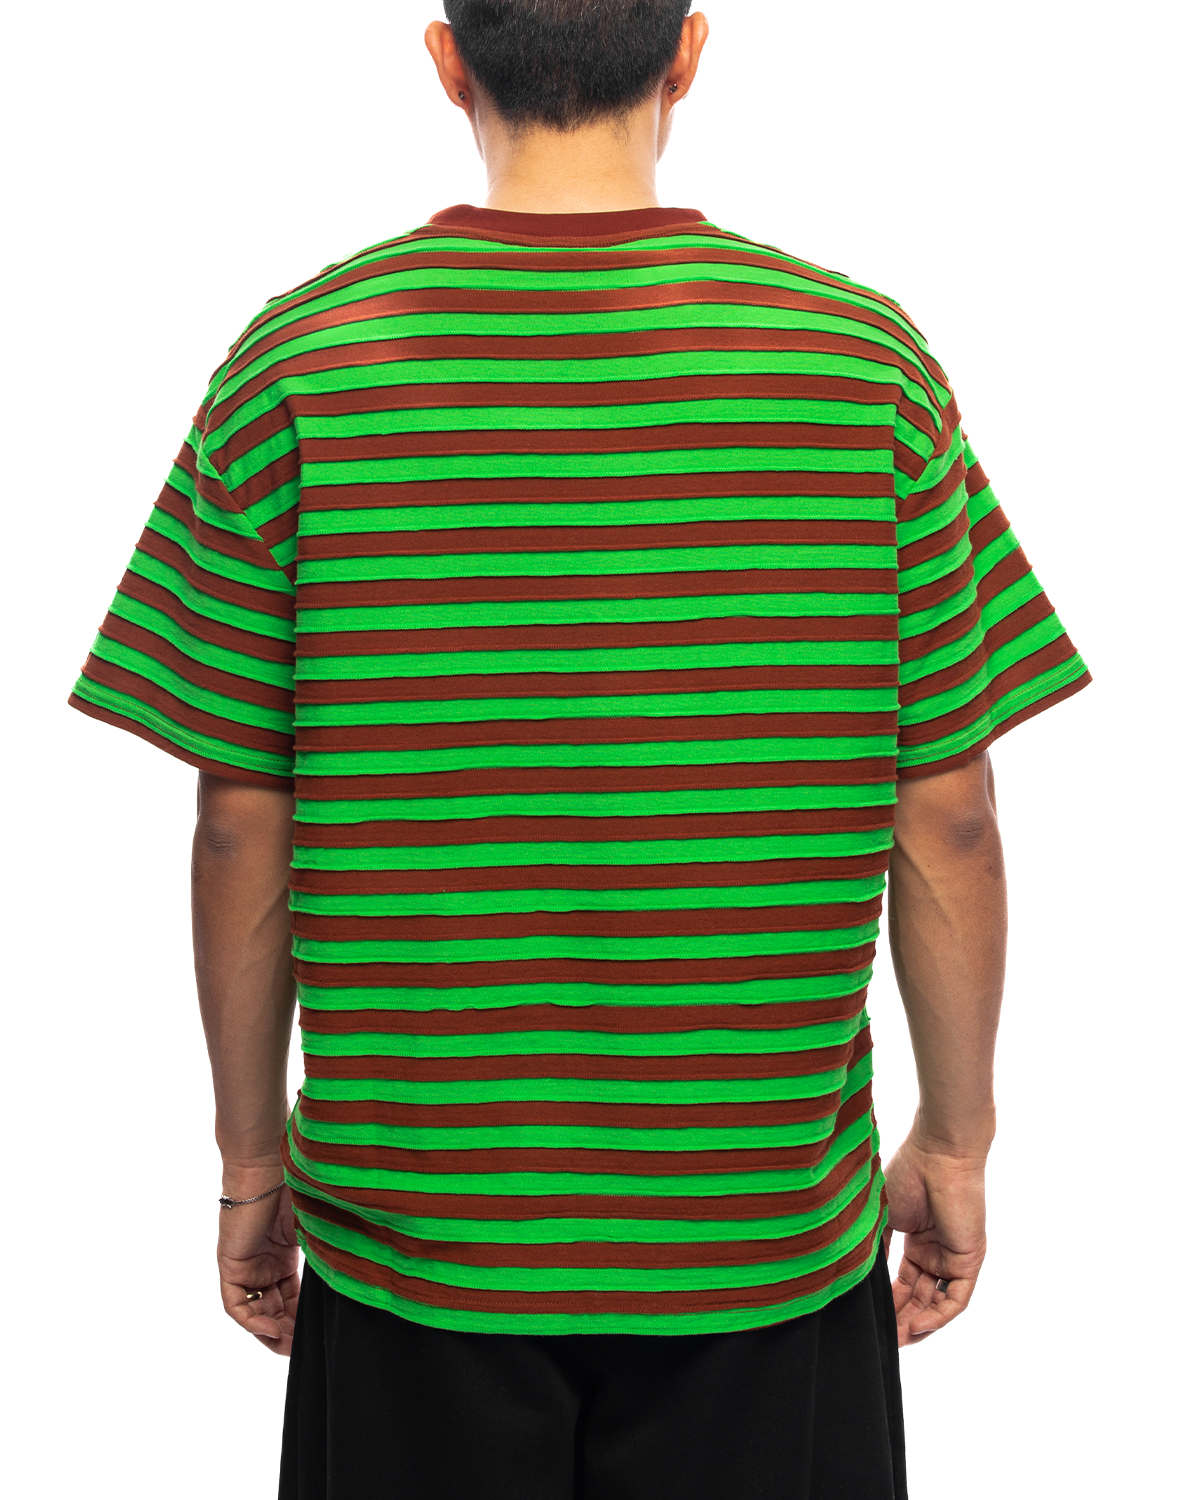 Denny Blaine Striped T-shirt Apple/Caramel